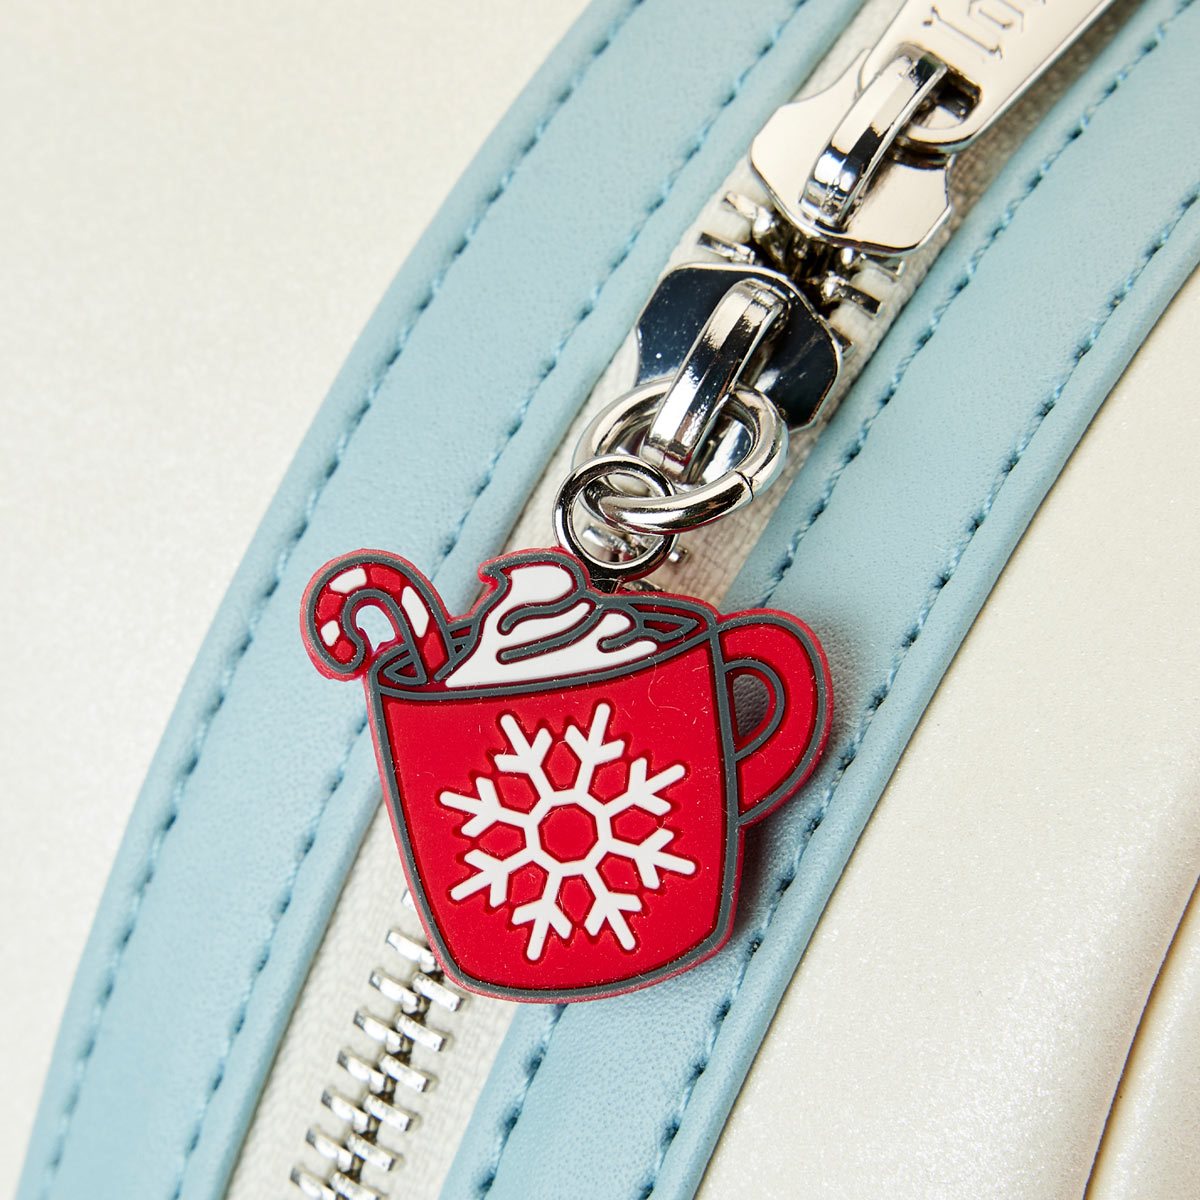 Lilo & Stitch Holiday Snow Angel Stitch Cosplay Mini-Backpack